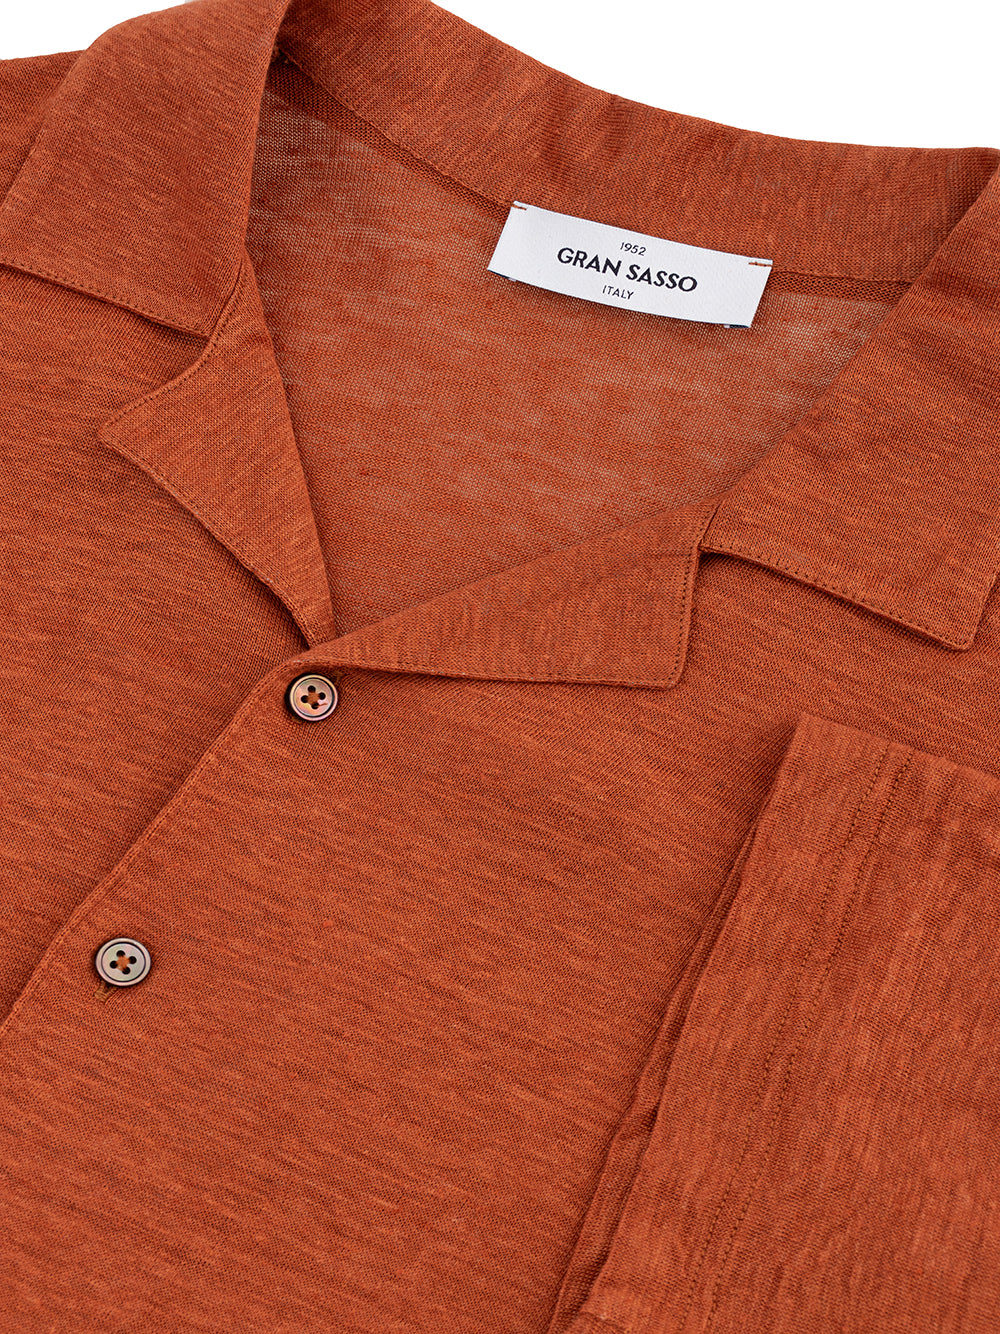 Brown Half Sleeve Shirt in Gran Sasso Linen